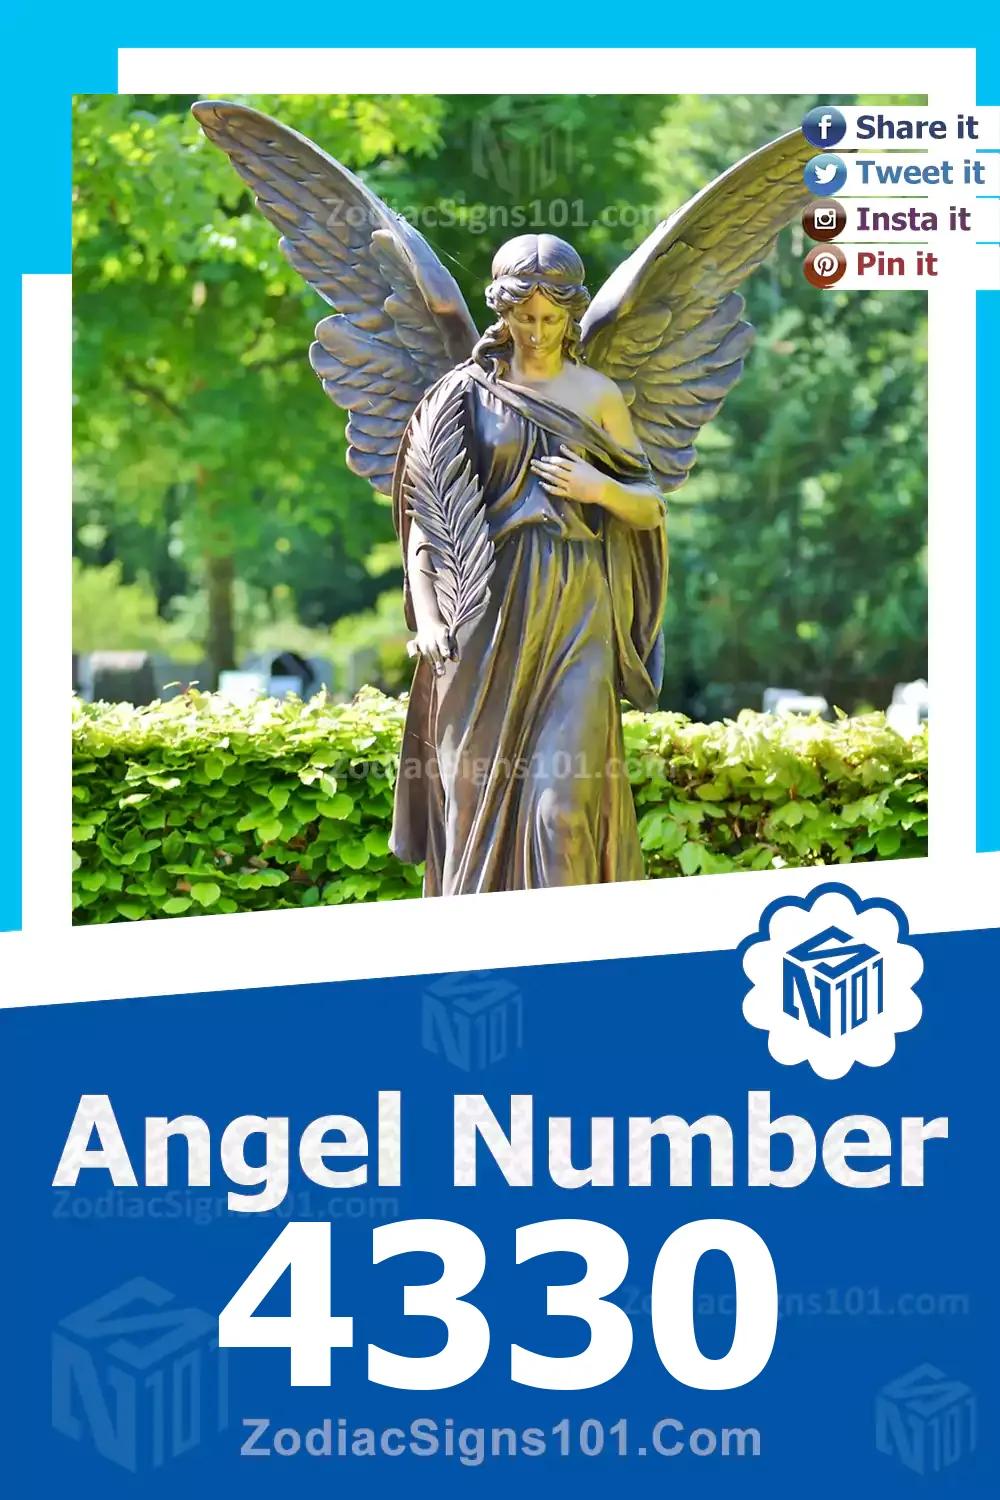 4330-Angel-Number-Meaning.jpg